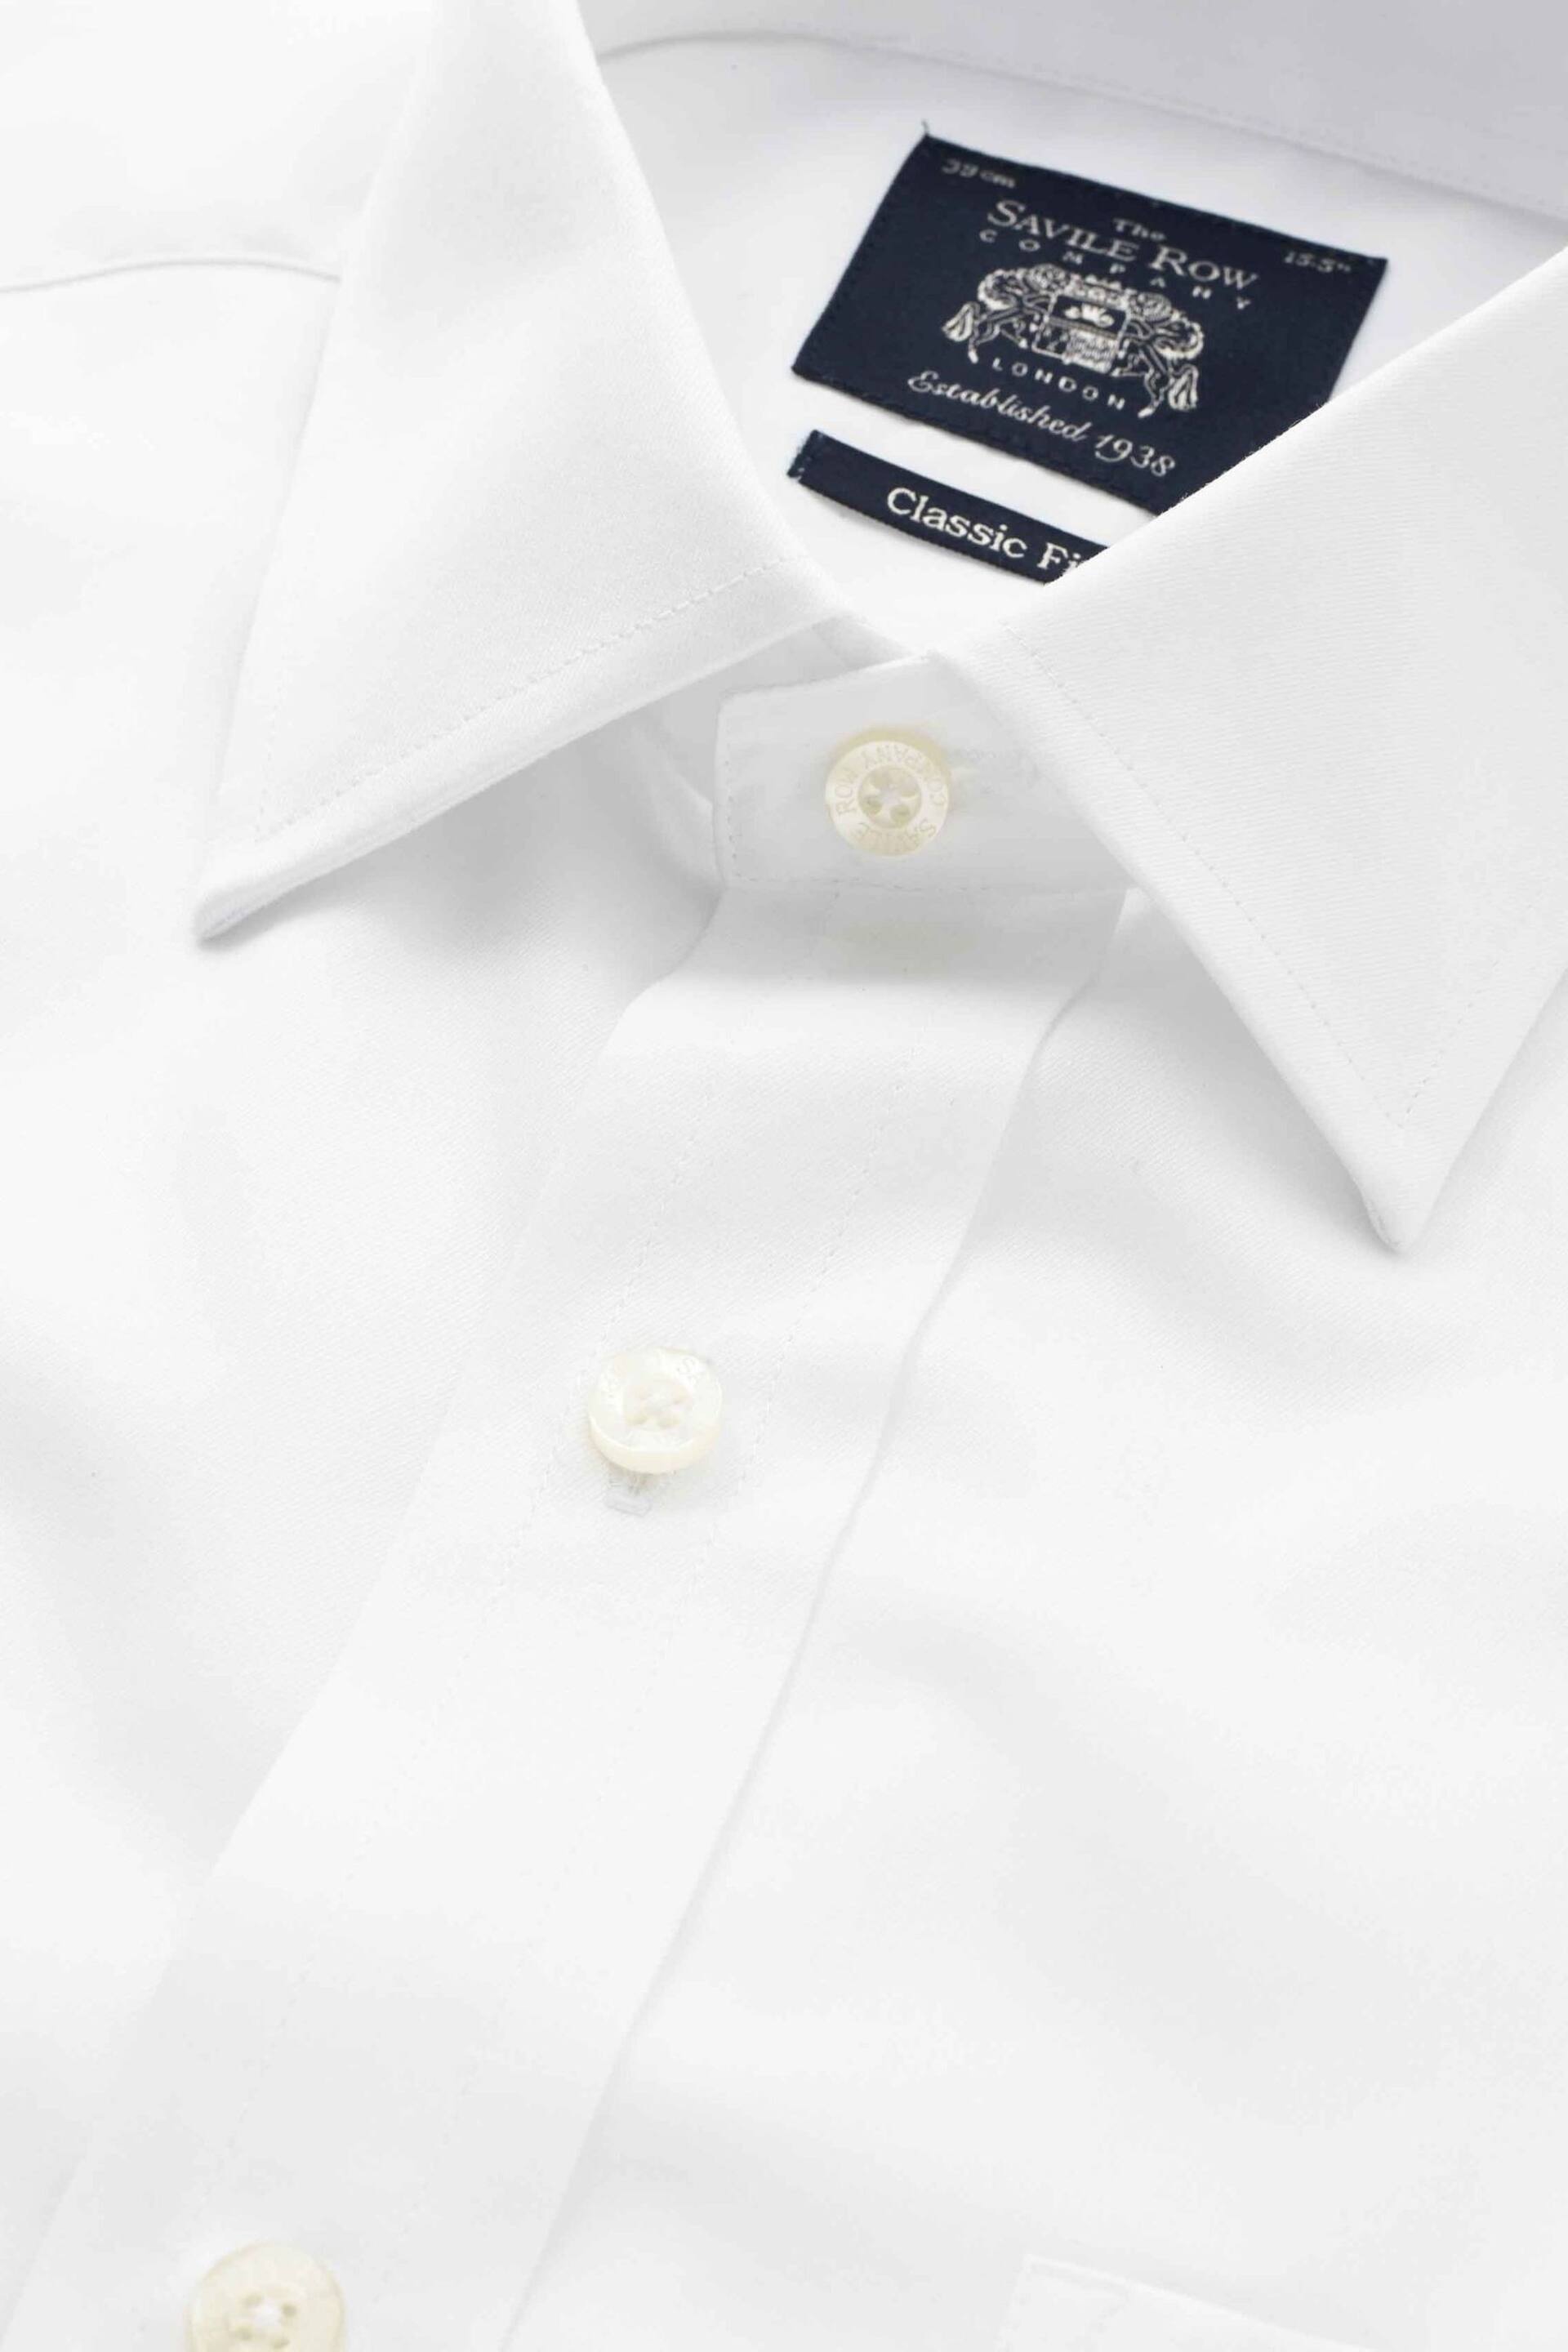 Savile Row Co White Twill Classic Fit Single Cuff Shirt - Image 4 of 6